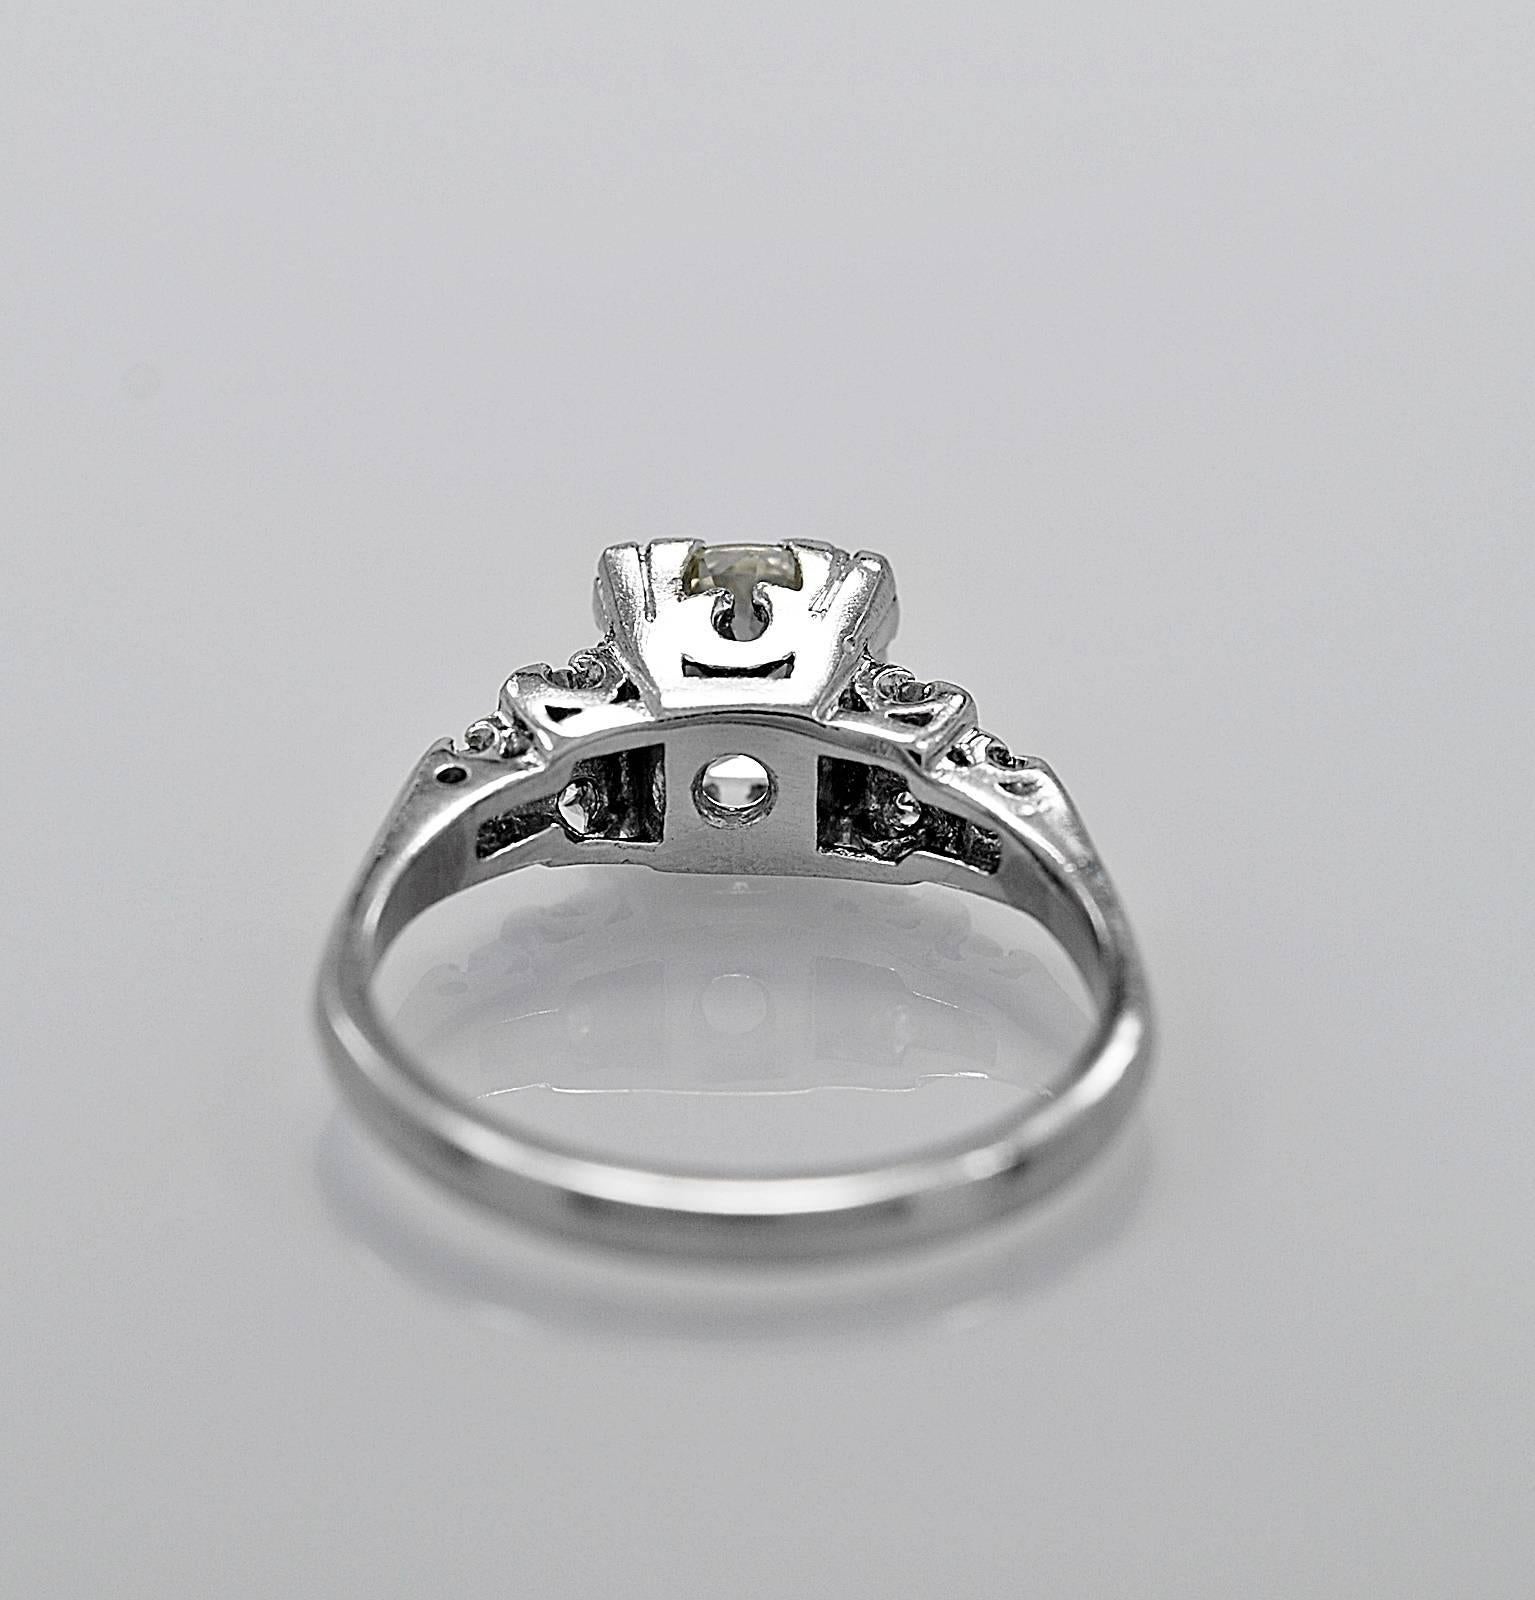 1.31 carat diamond ring